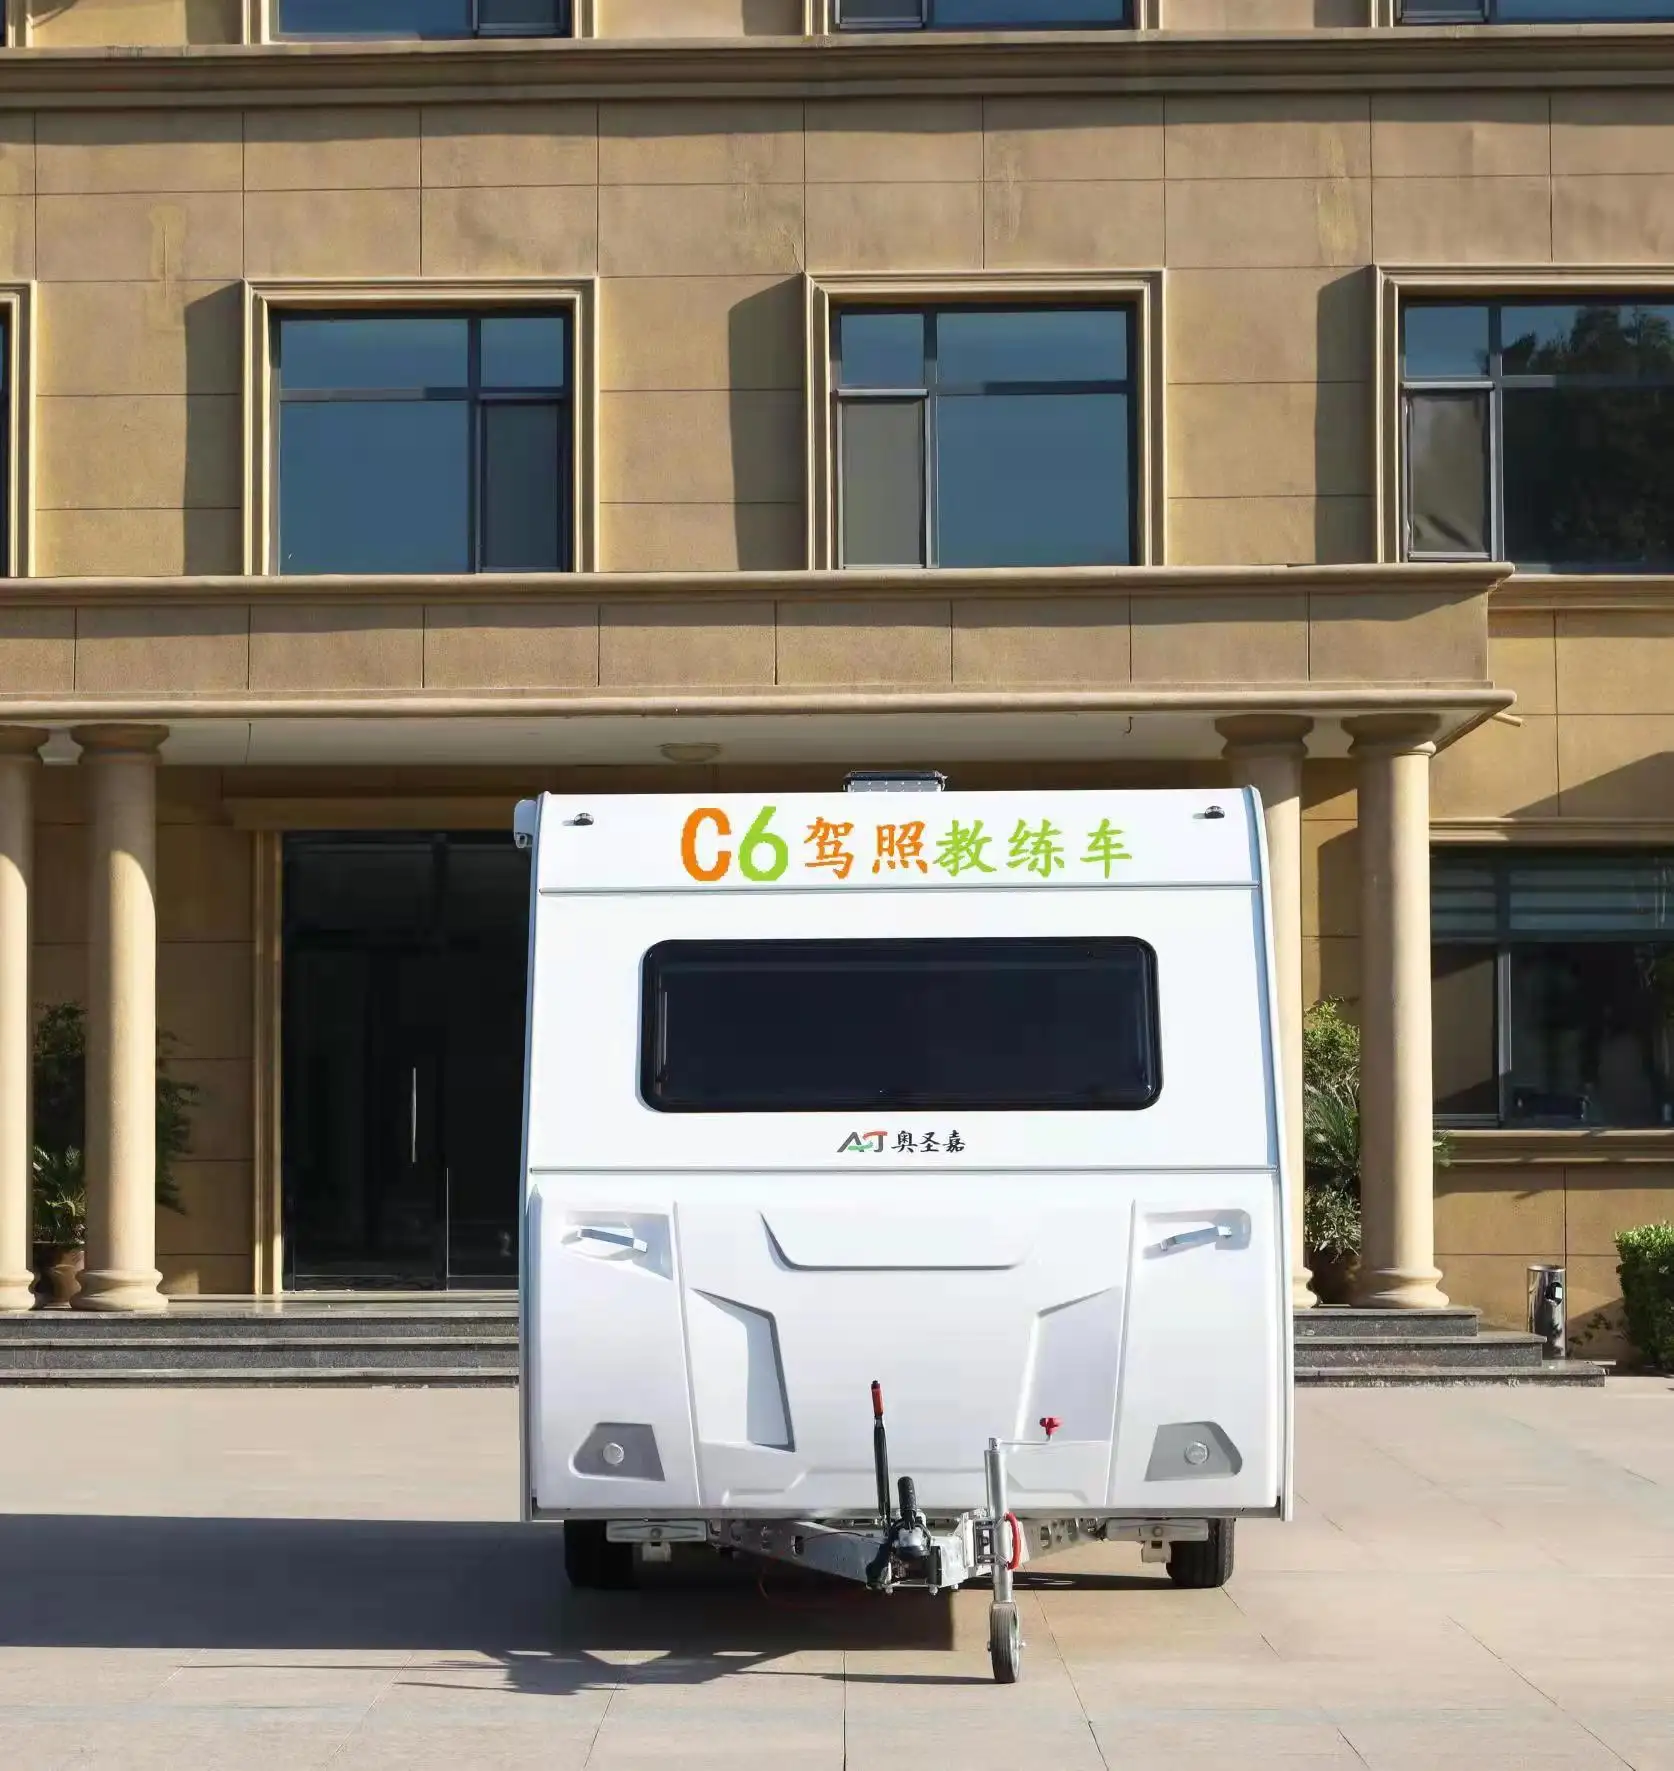 Luxury Rv Caravan Motor Homes Off Road Mobile House Travel Trailer Australia Caravan Camper for Family